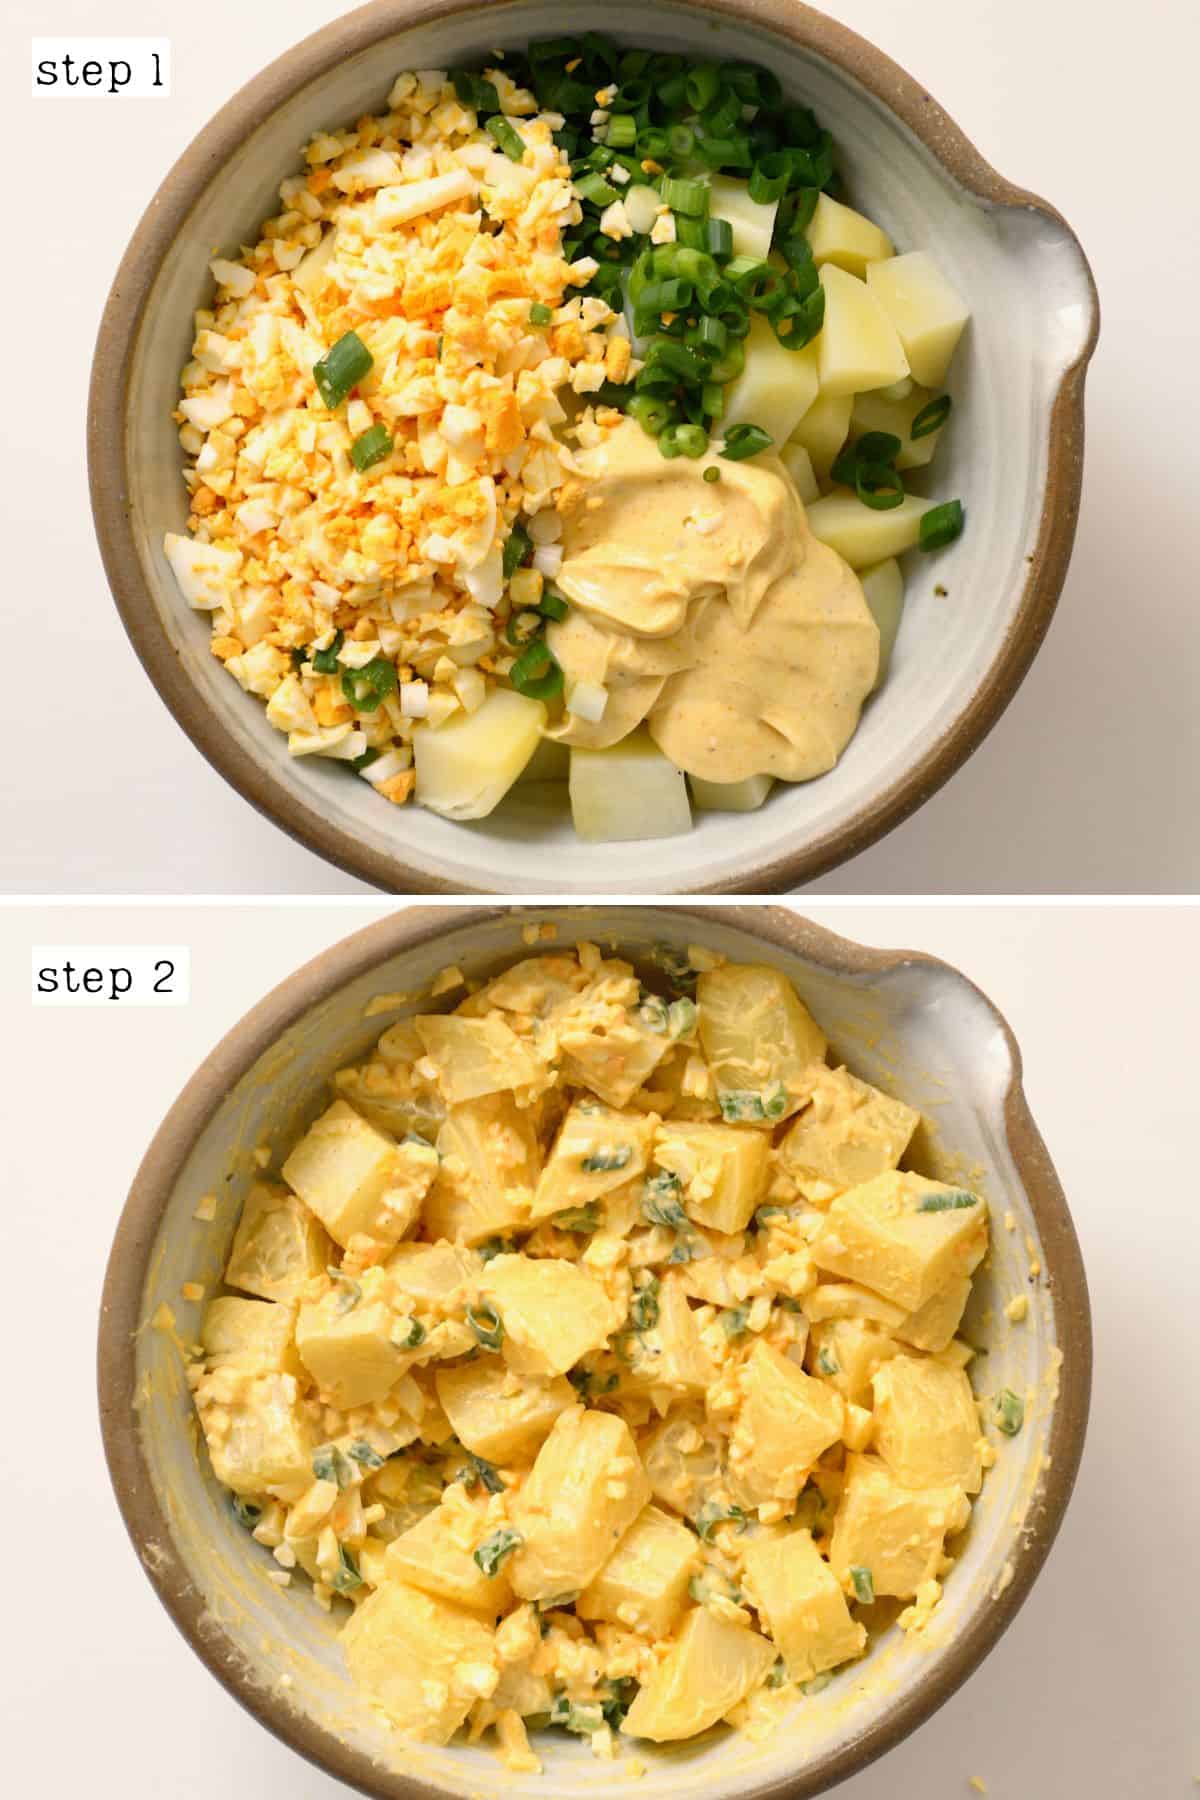 Steps for preparing potato egg salad